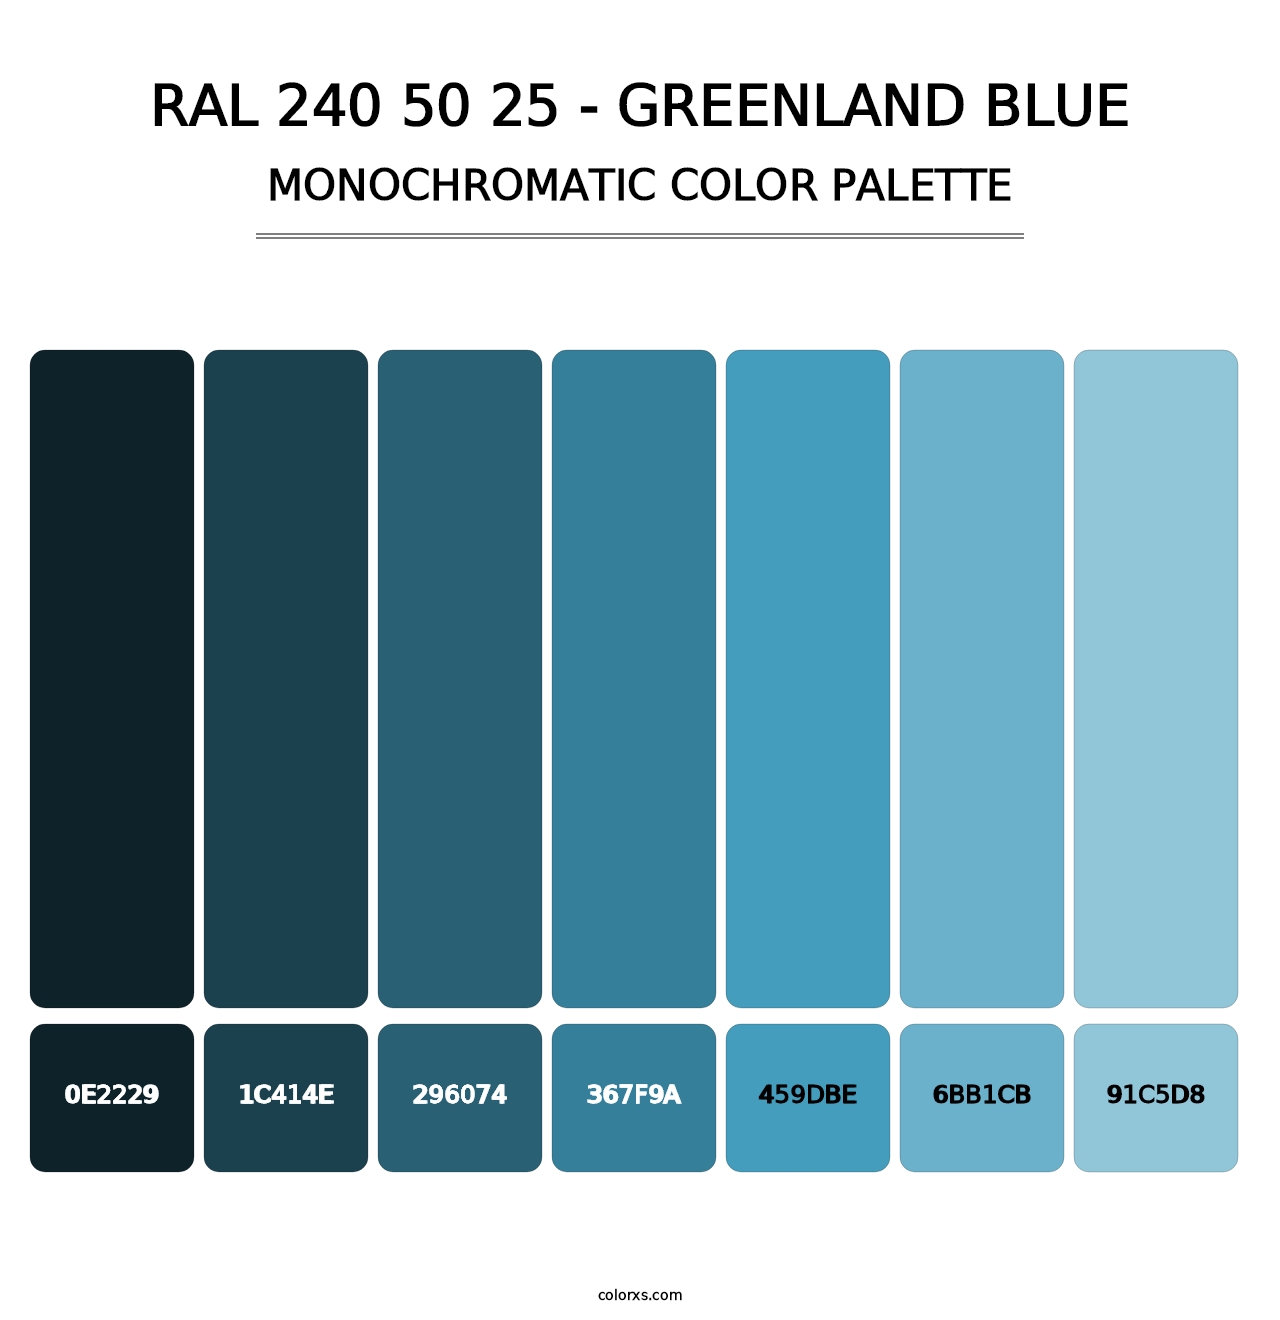 RAL 240 50 25 - Greenland Blue - Monochromatic Color Palette